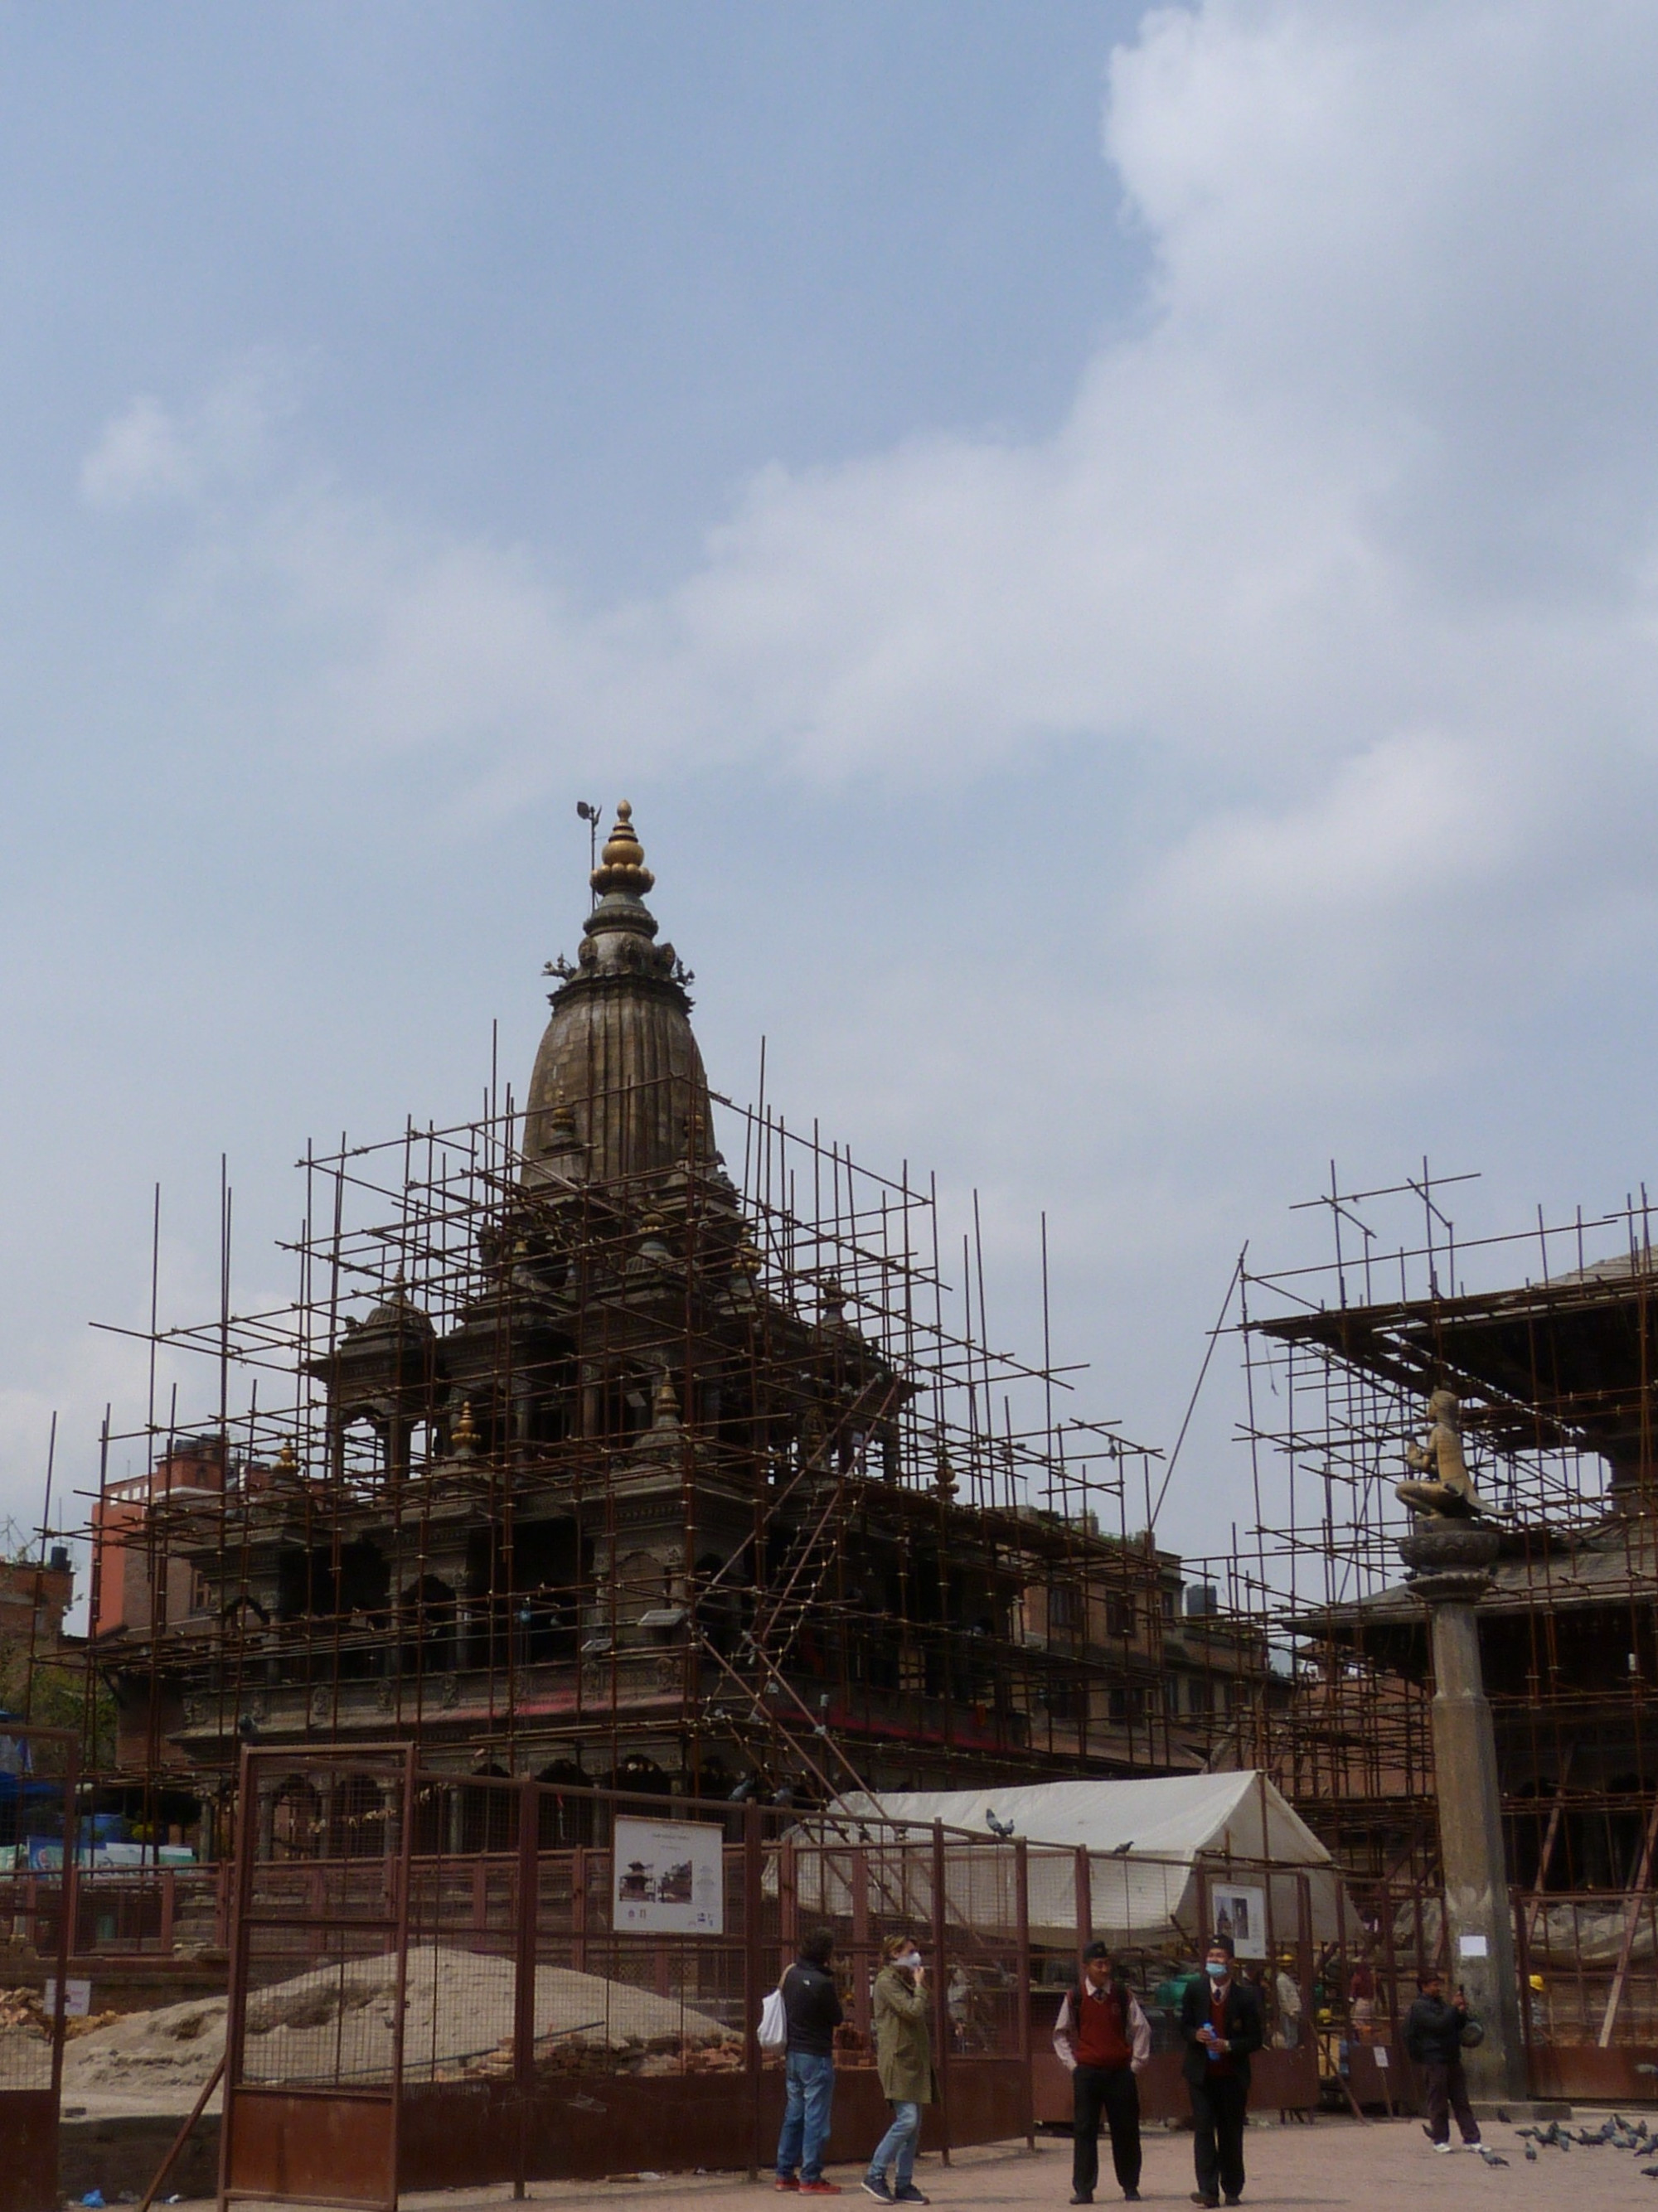 Patan Durbar Square, Непал